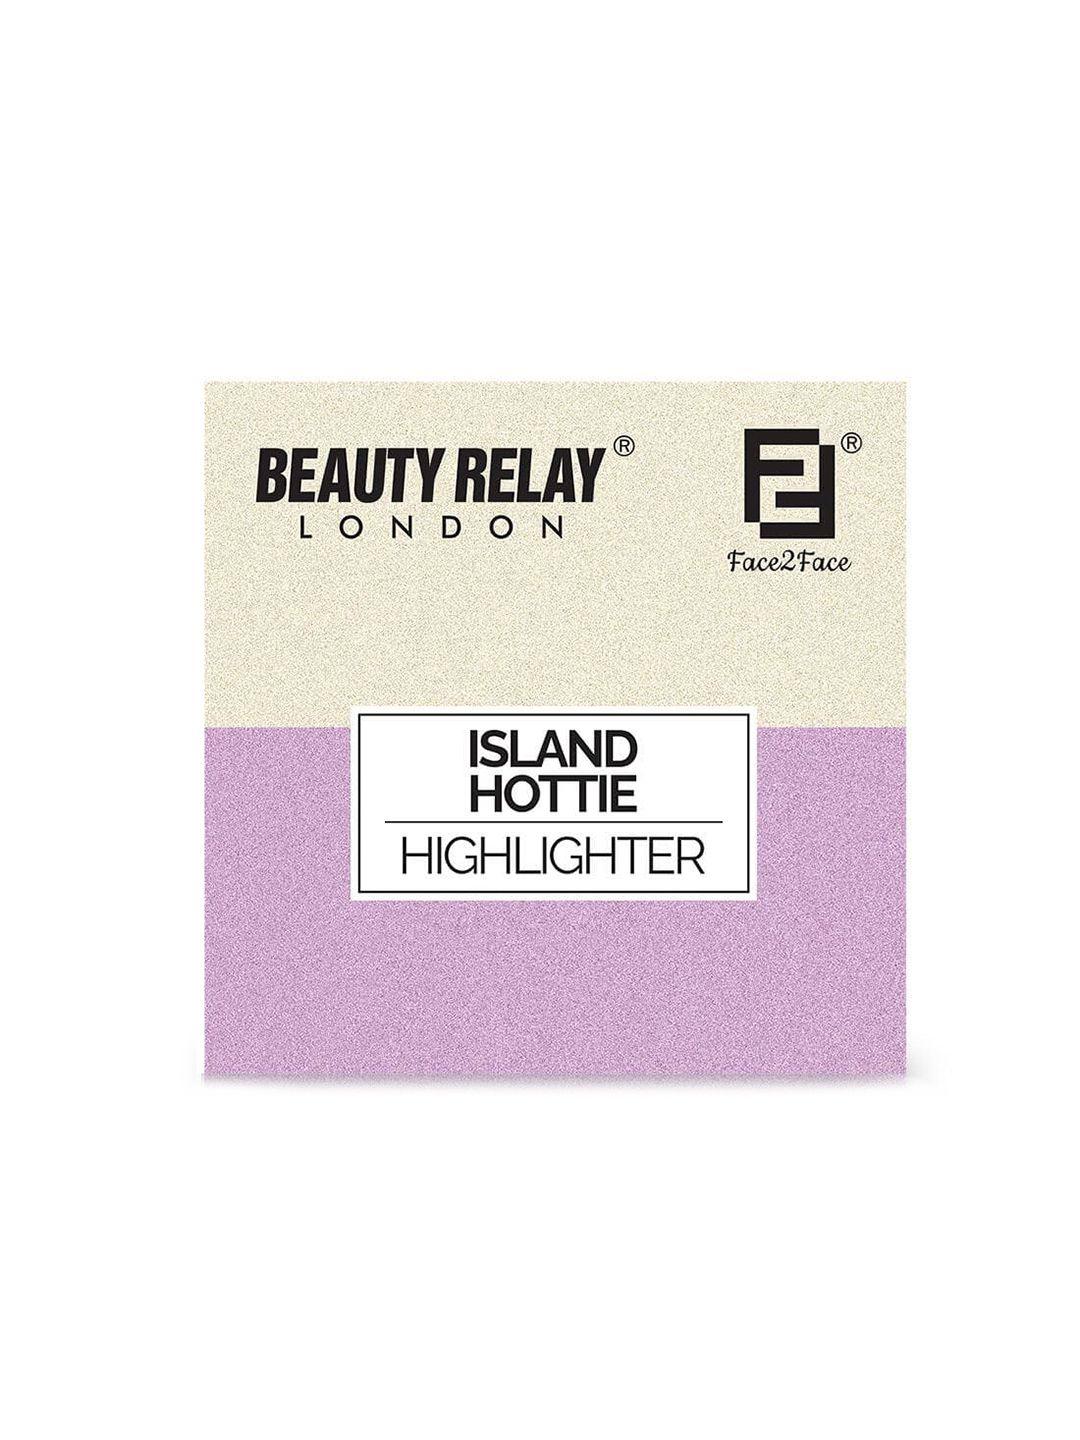 beautyrelay london face 2 face island hottie highlighter with 2 shades